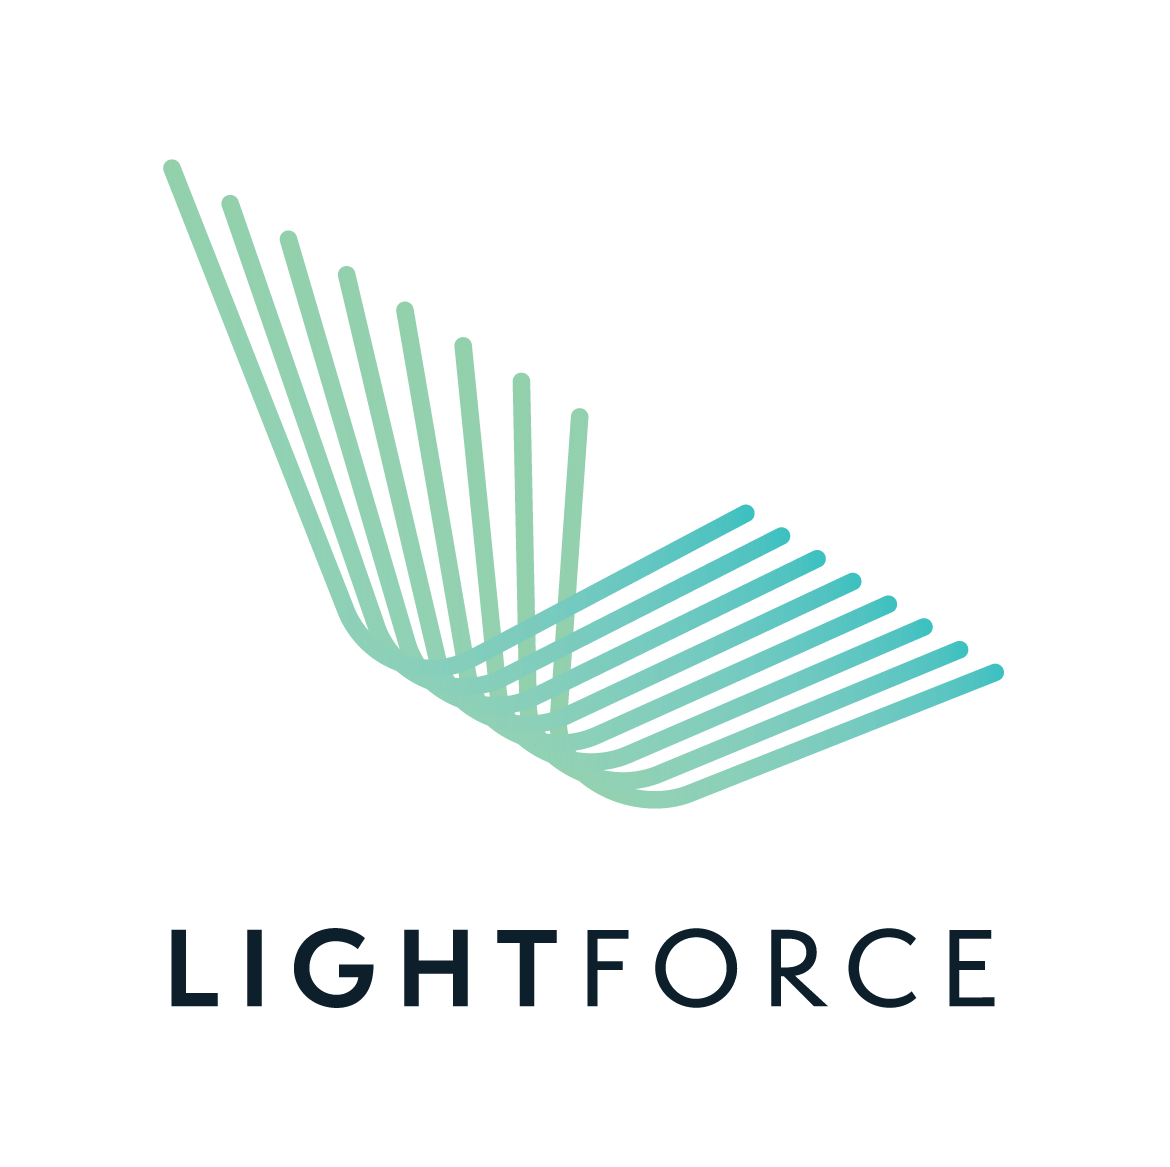 Lightforce_LogoandLogotype